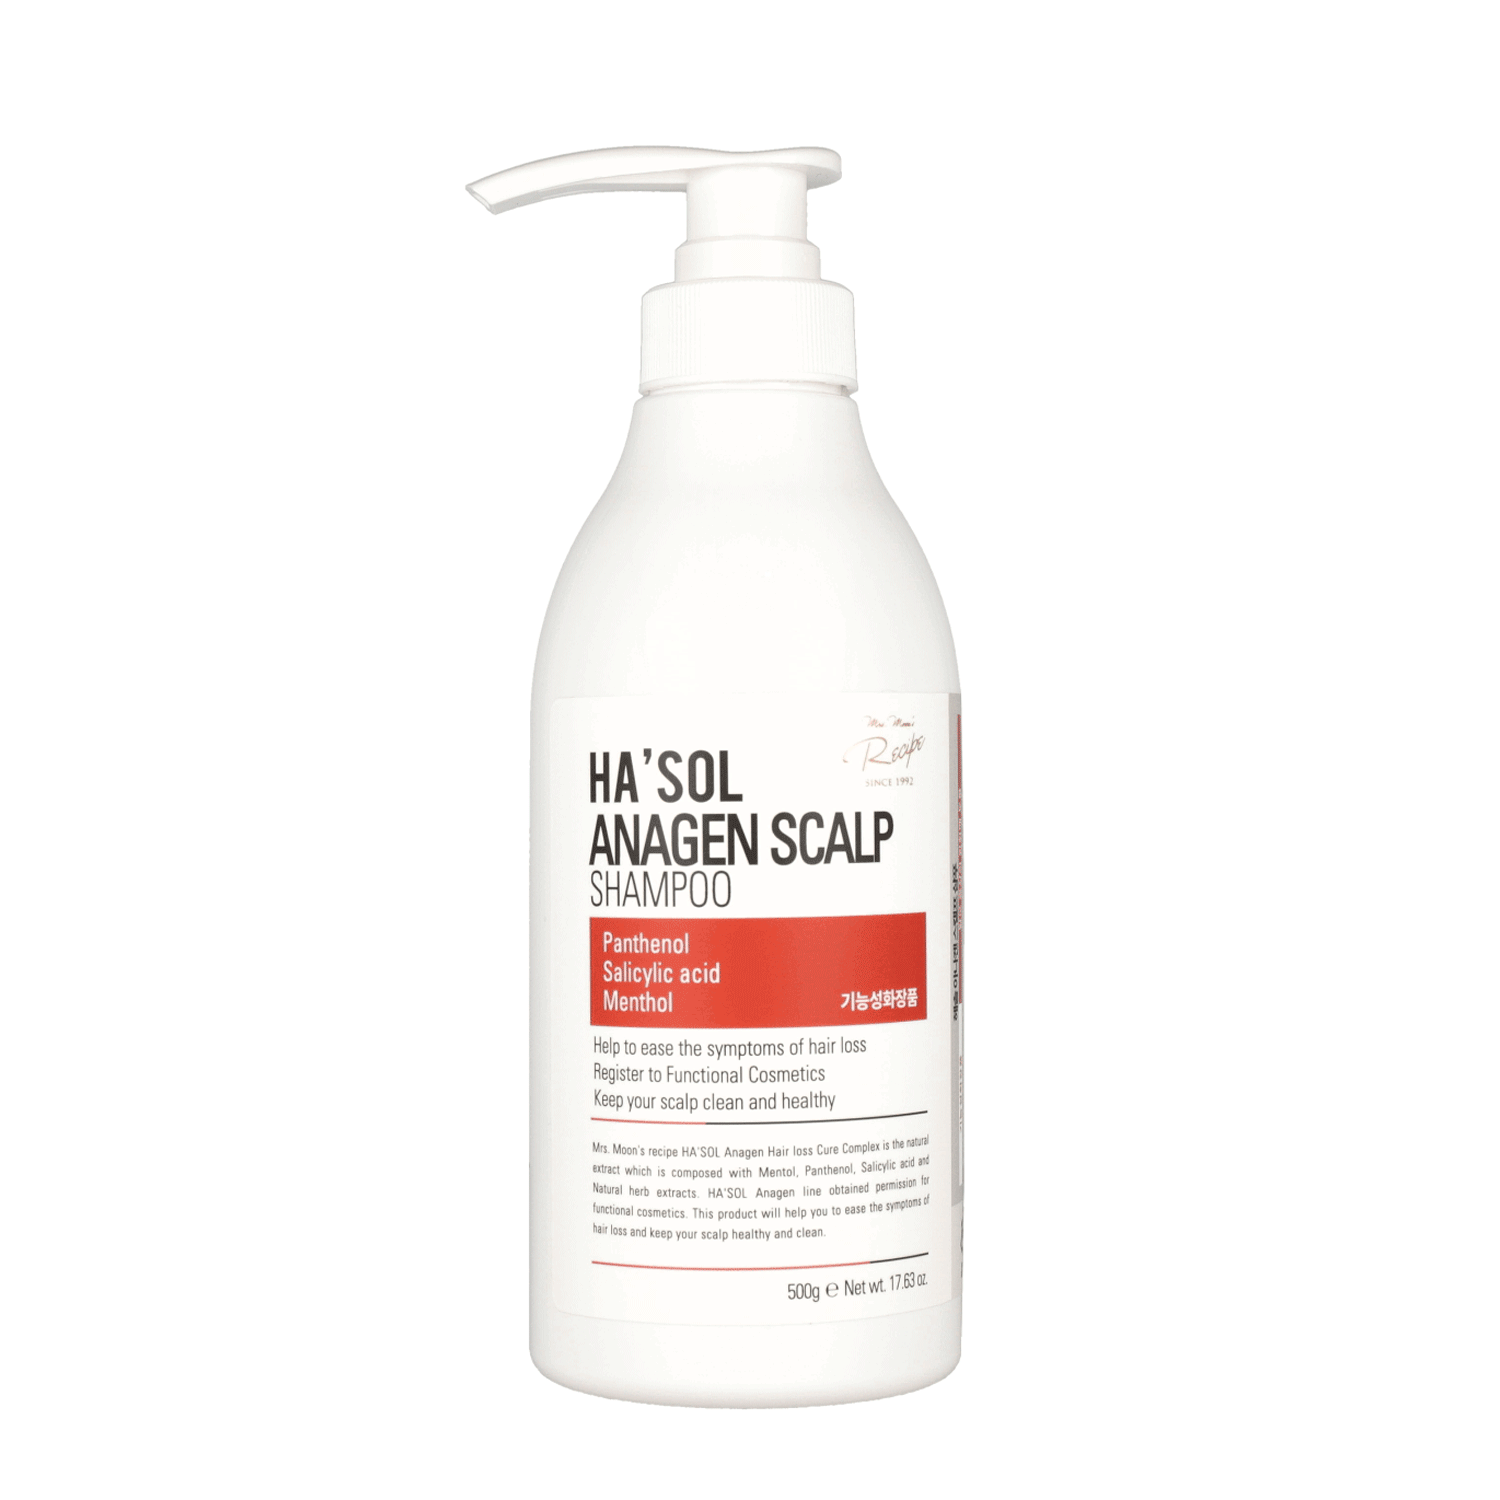 HA'SOL Anagen Scalp Shampoo 500g For Hair Loss and Scalp Care - DODOSKIN